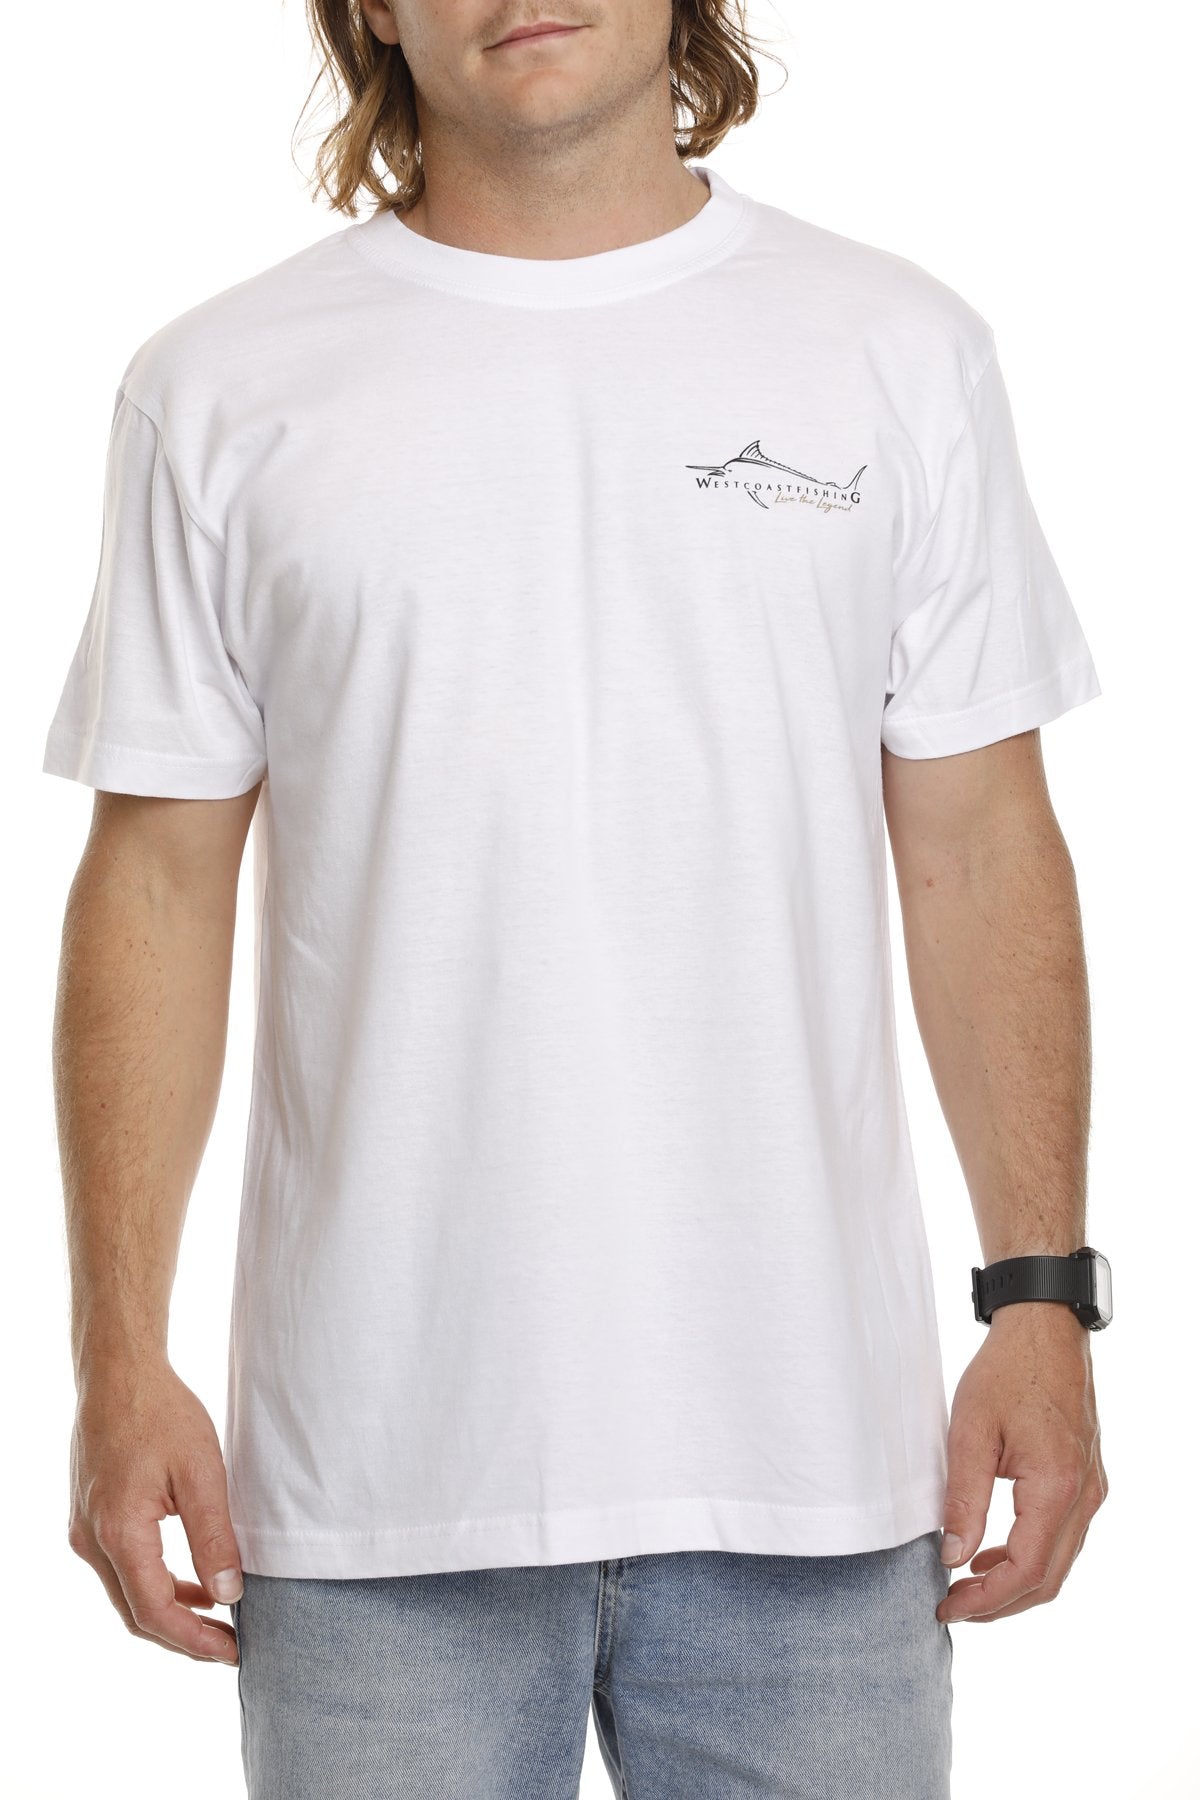 West Coast Fishing Co Black Marlin Short Sleeve Tshirt Front